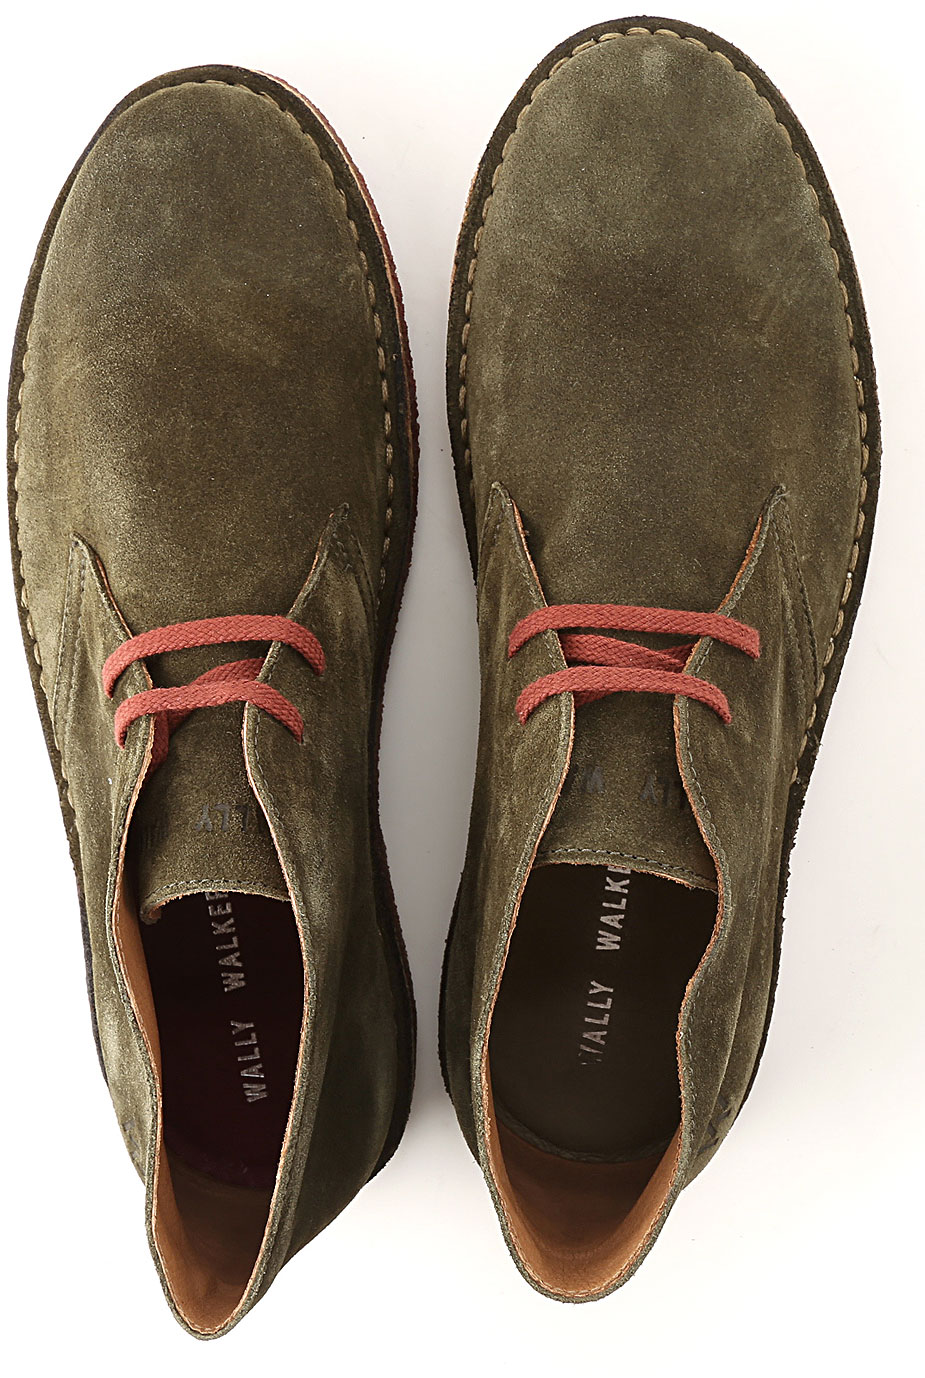 Mens Shoes Wally Walker, Style code: chukka-360-